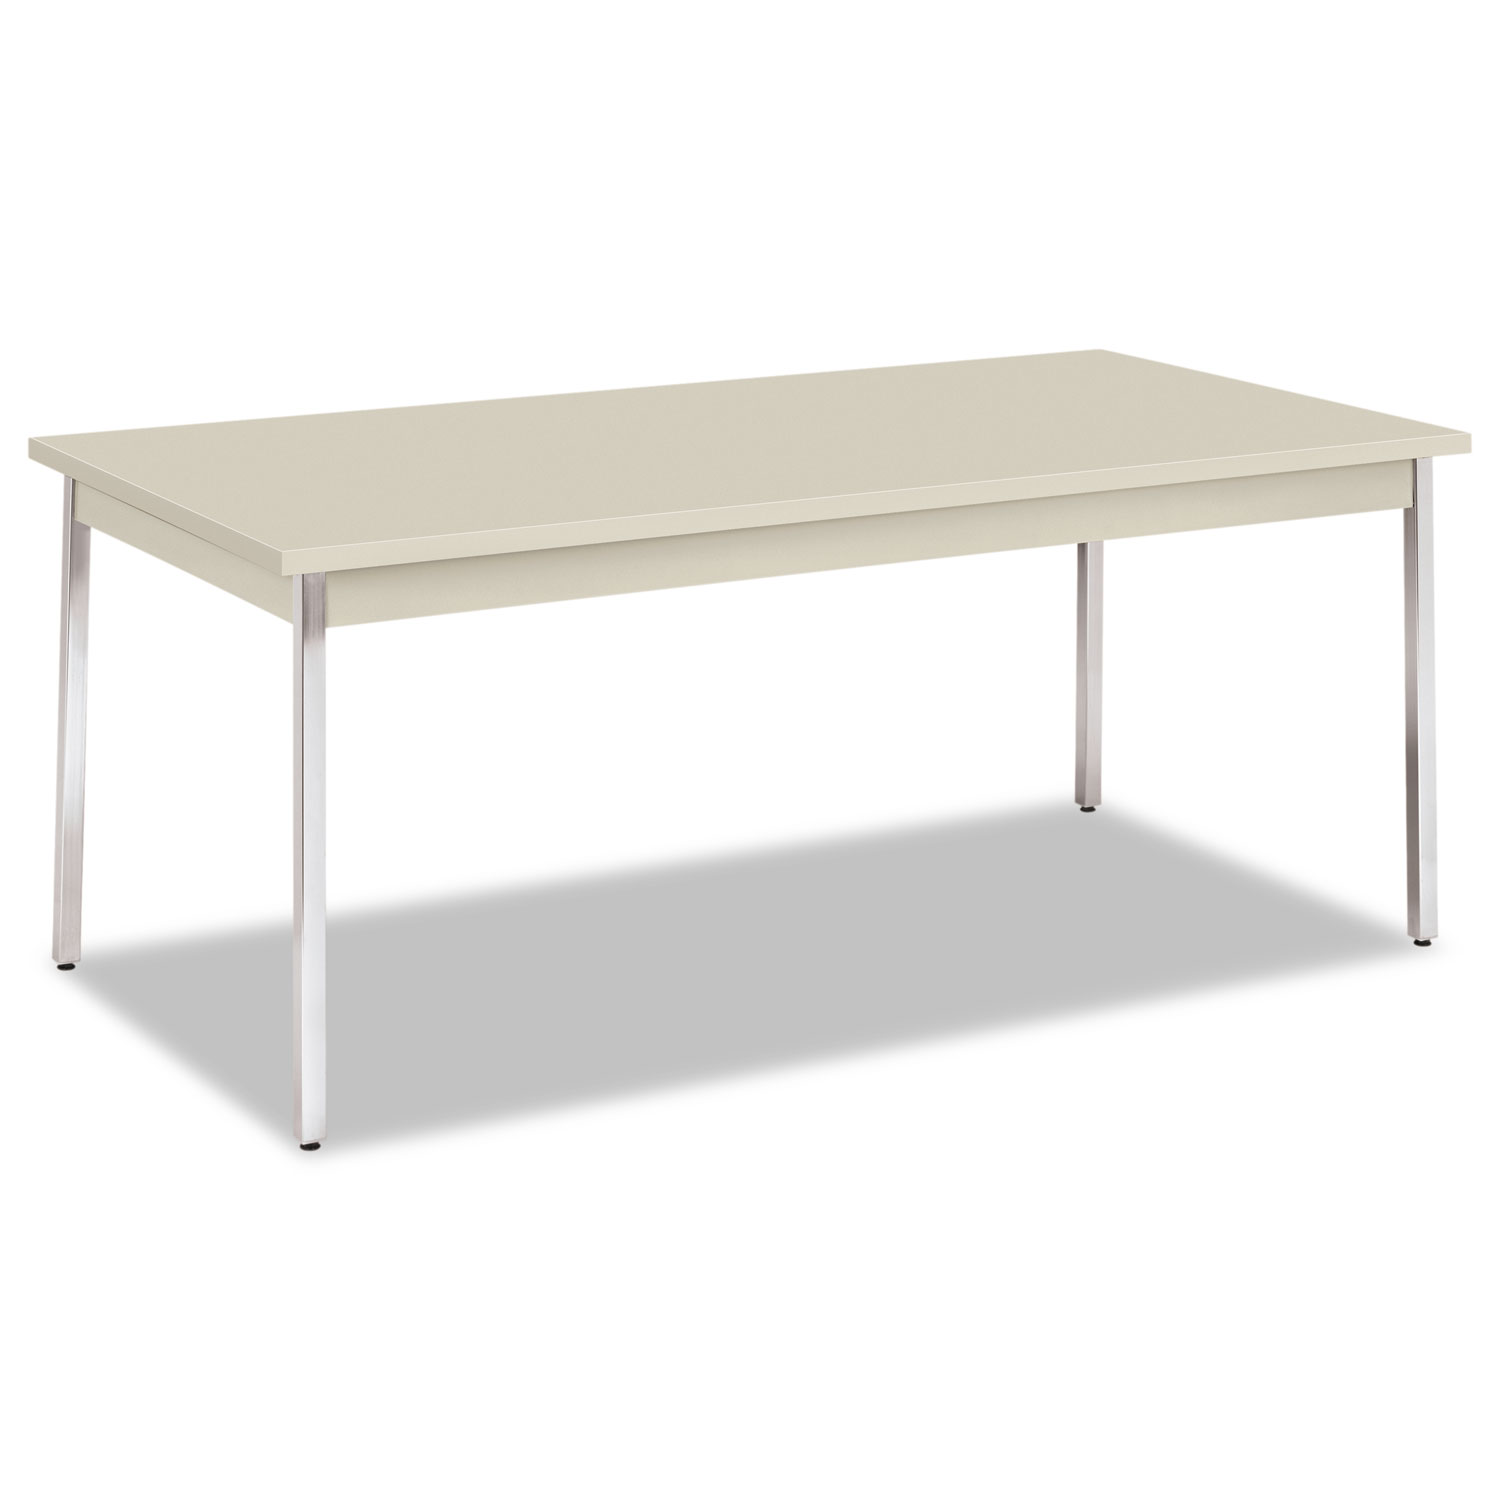 Utility Table, Rectangular, 72w x 36d x 29h, Light Gray